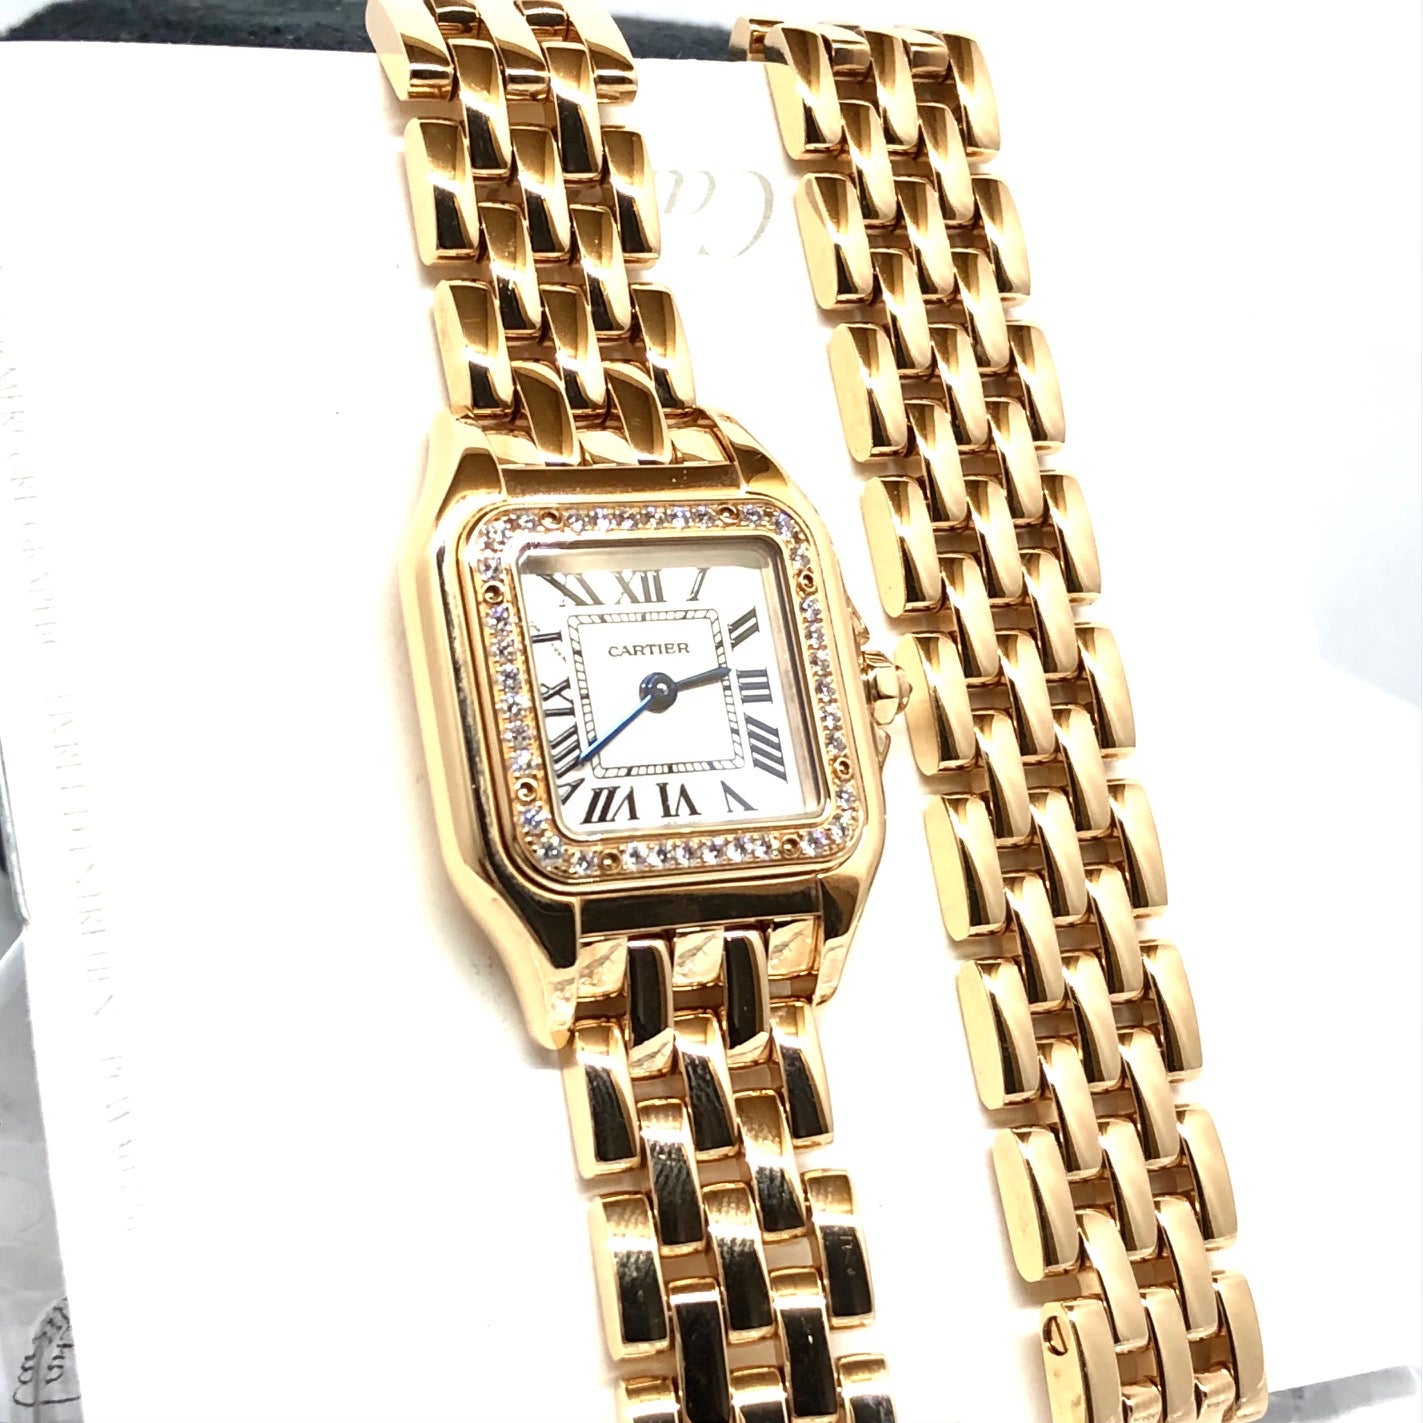 Cartier Panthère 18K Pink Gold & Diamonds Ladies Watch